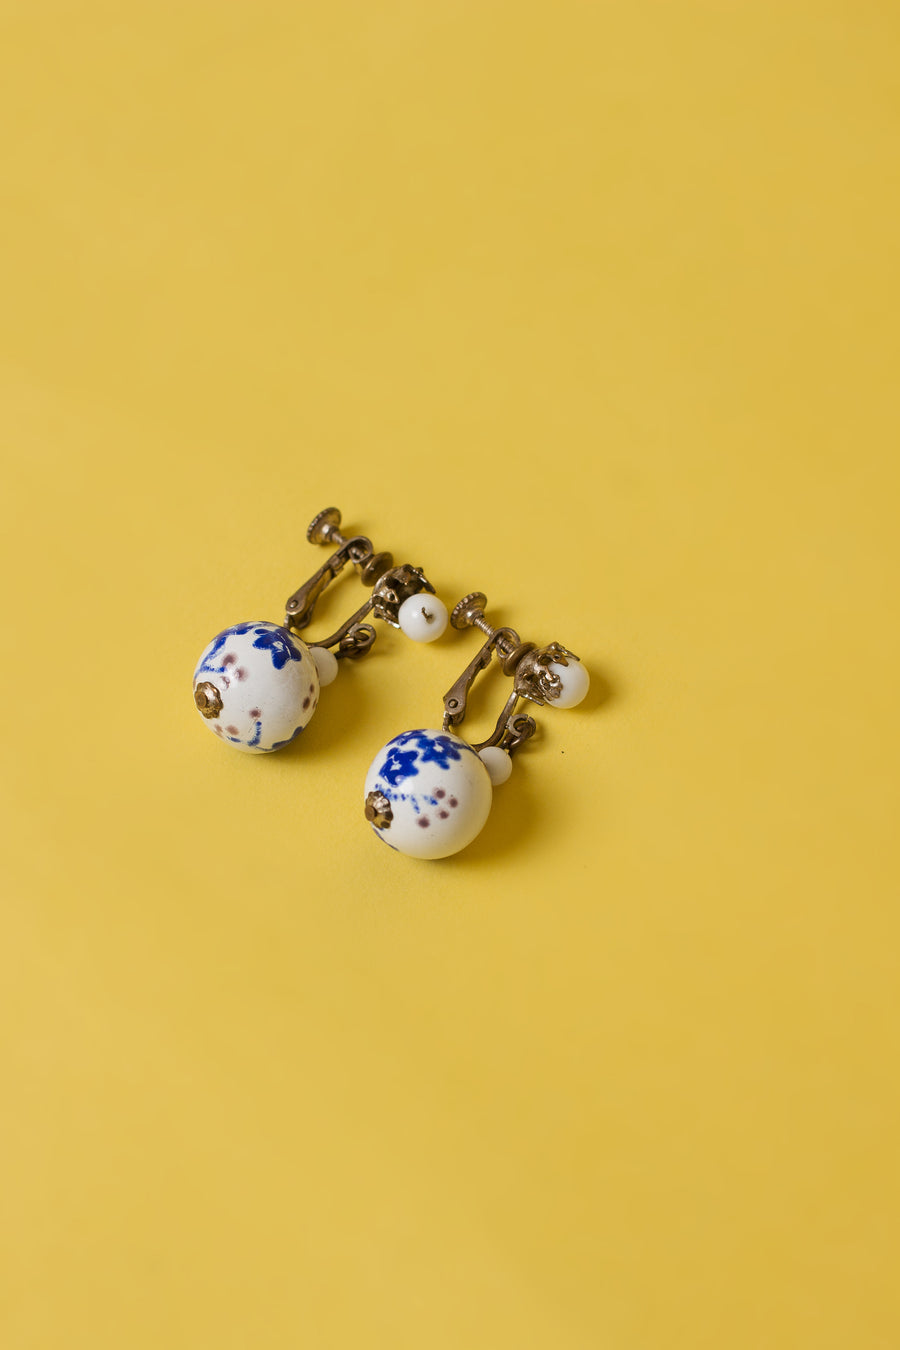 Vintage Chinese Teacup Pattern Clip-On Earrings